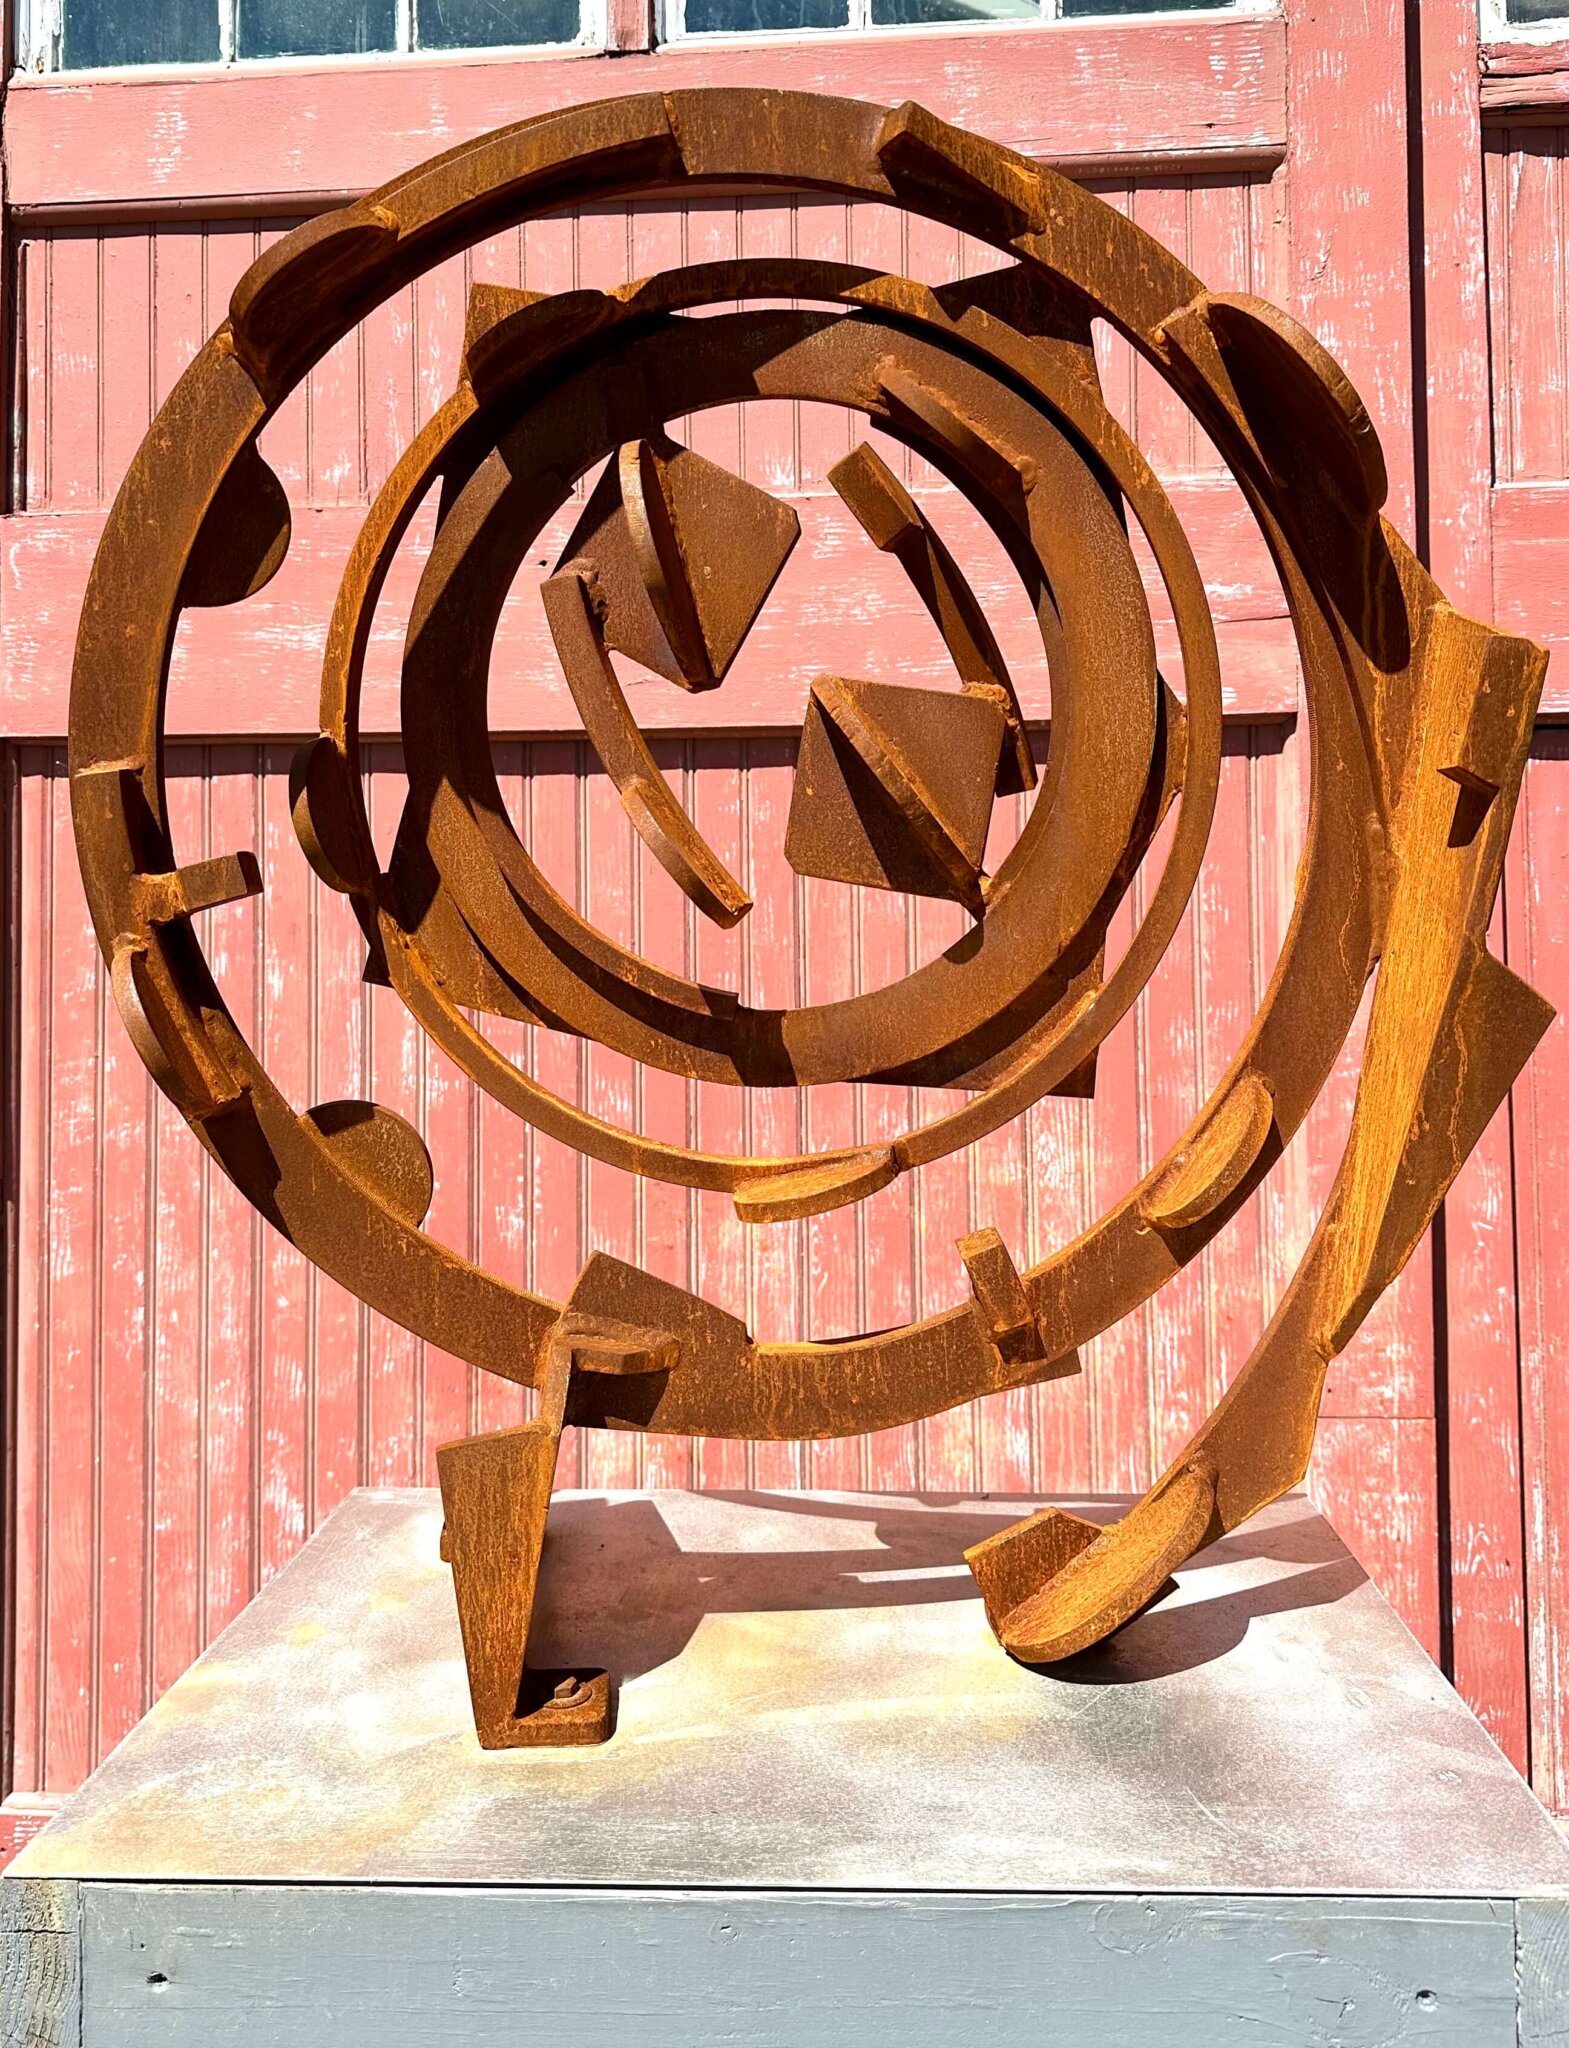 Joel Perlman's "Matchless" sculpture